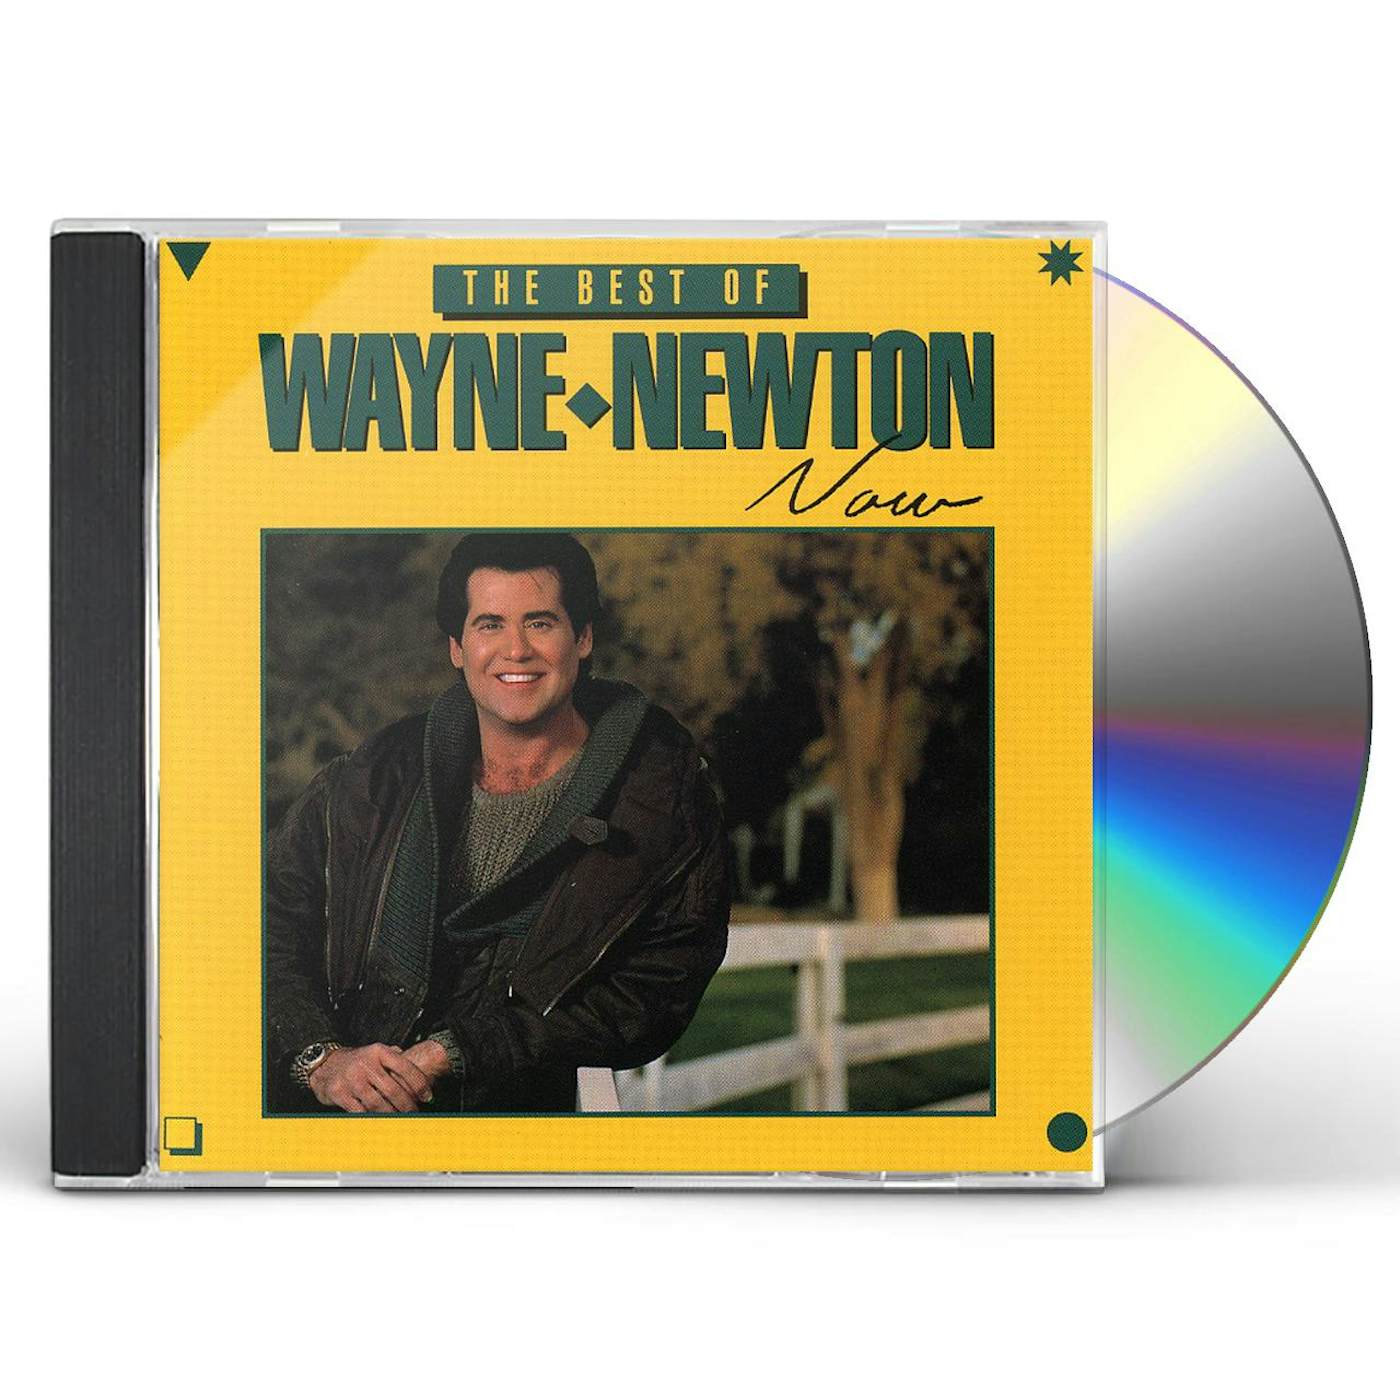 BEST OF WAYNE NEWTON NOW CD